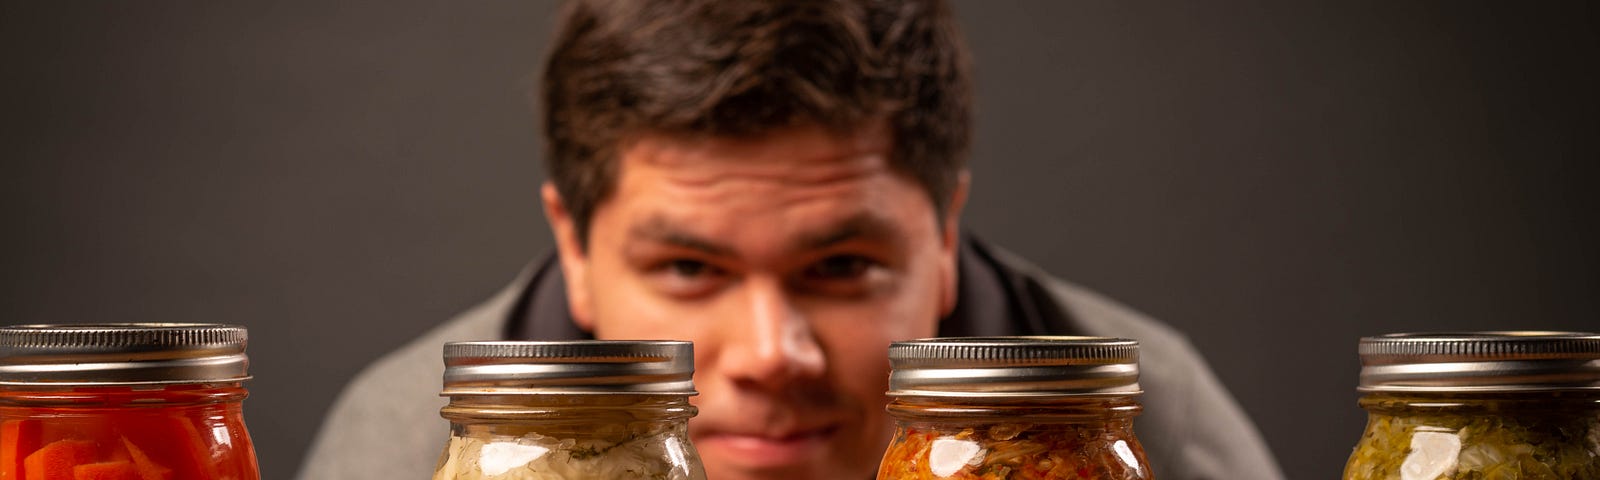 A man scrutinizing several jars of fermenting food